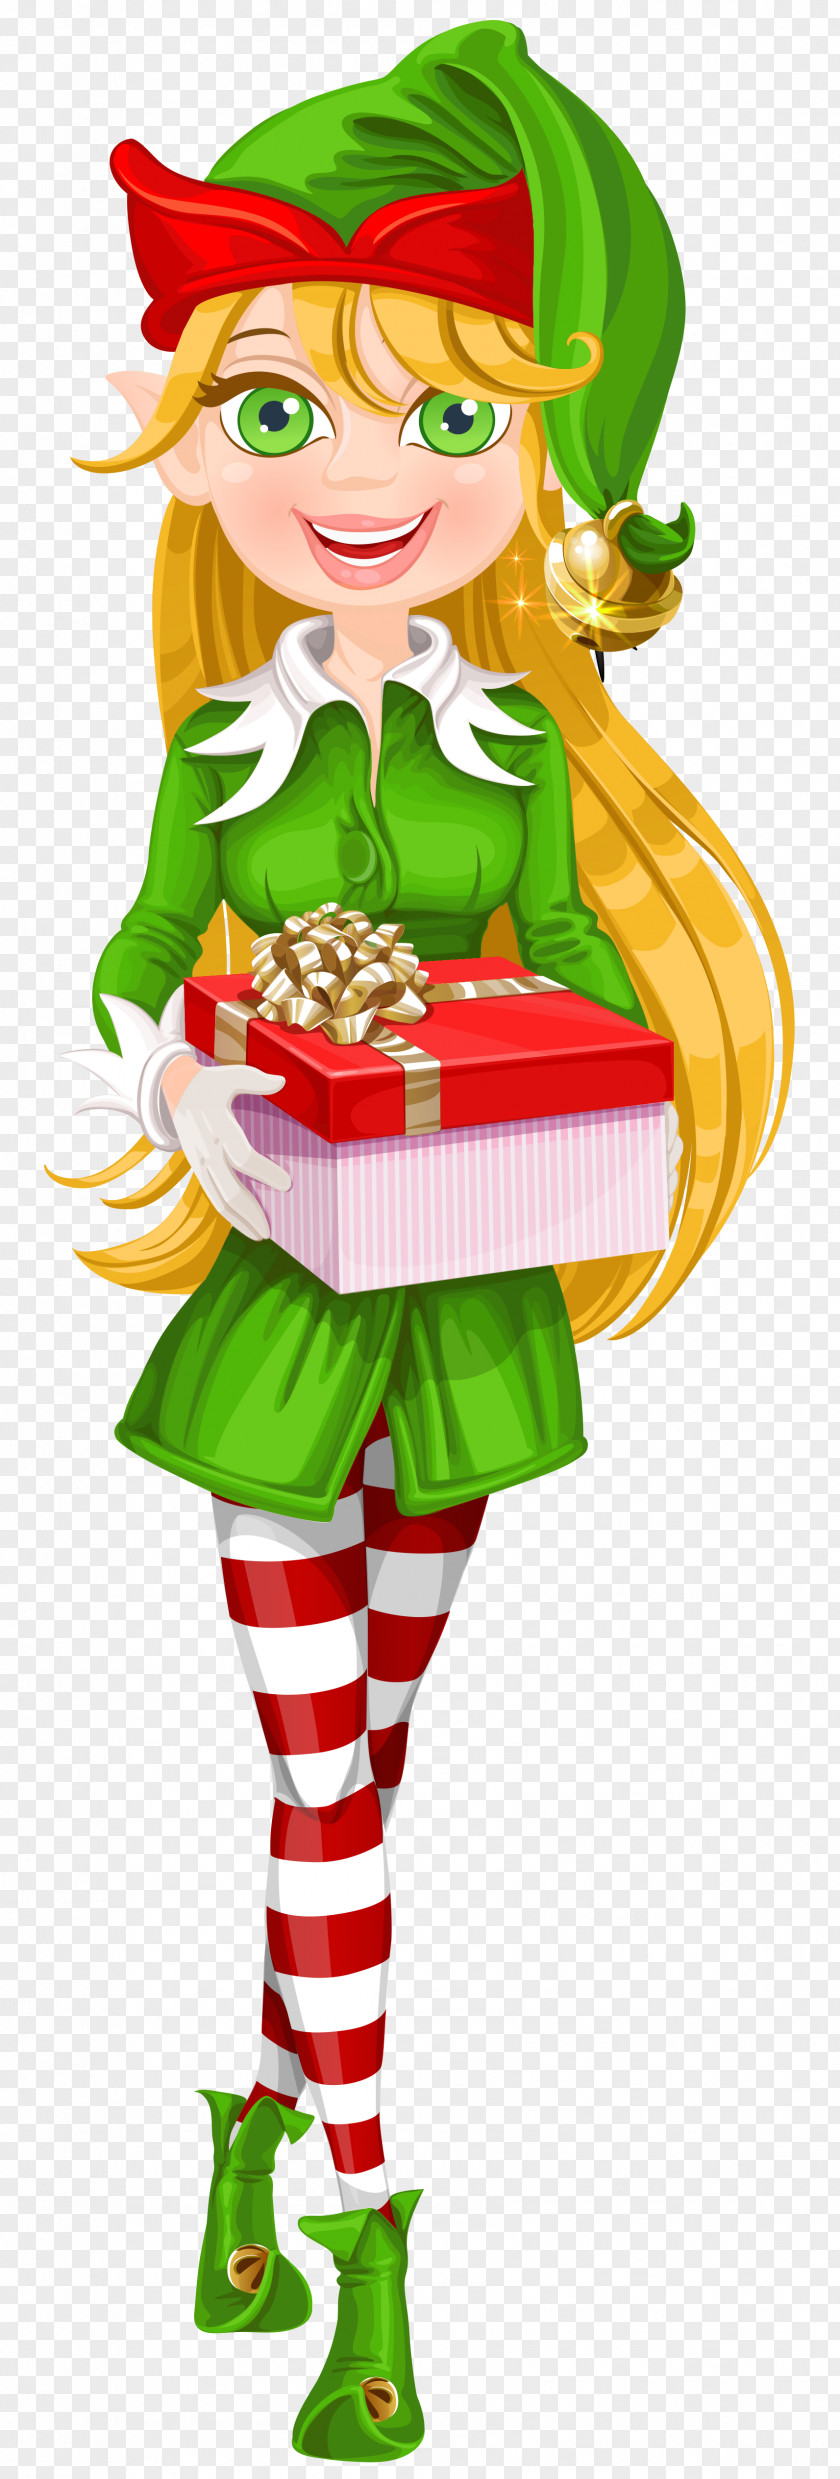 Christmas Elf Transparent Clip Art Image The On Shelf Santa Claus PNG